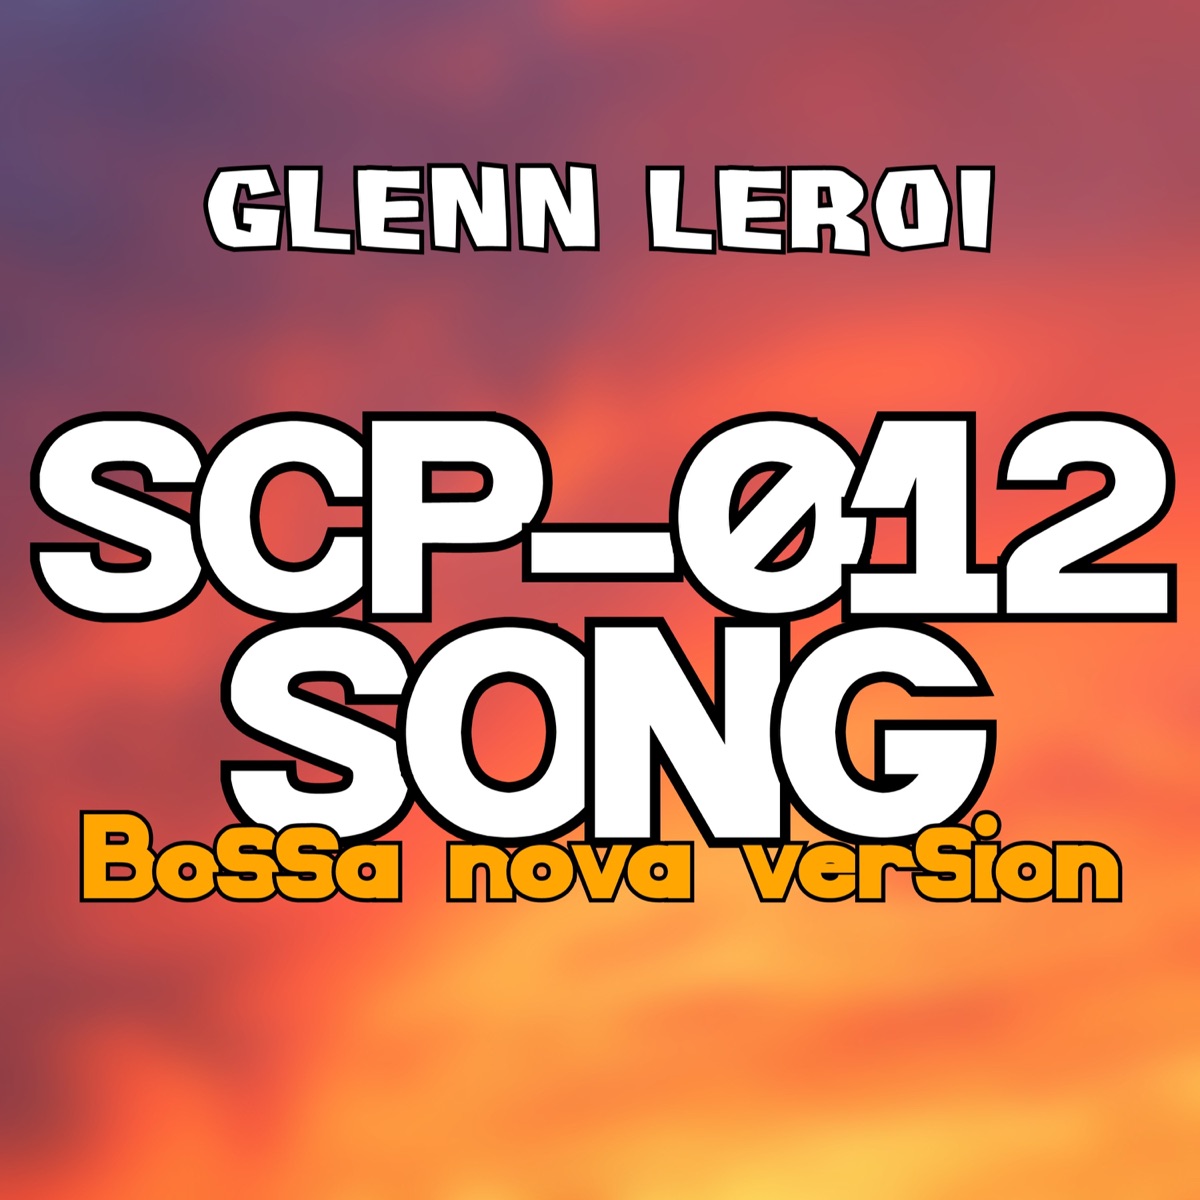 Glenn Leroi - Scp-008 Song